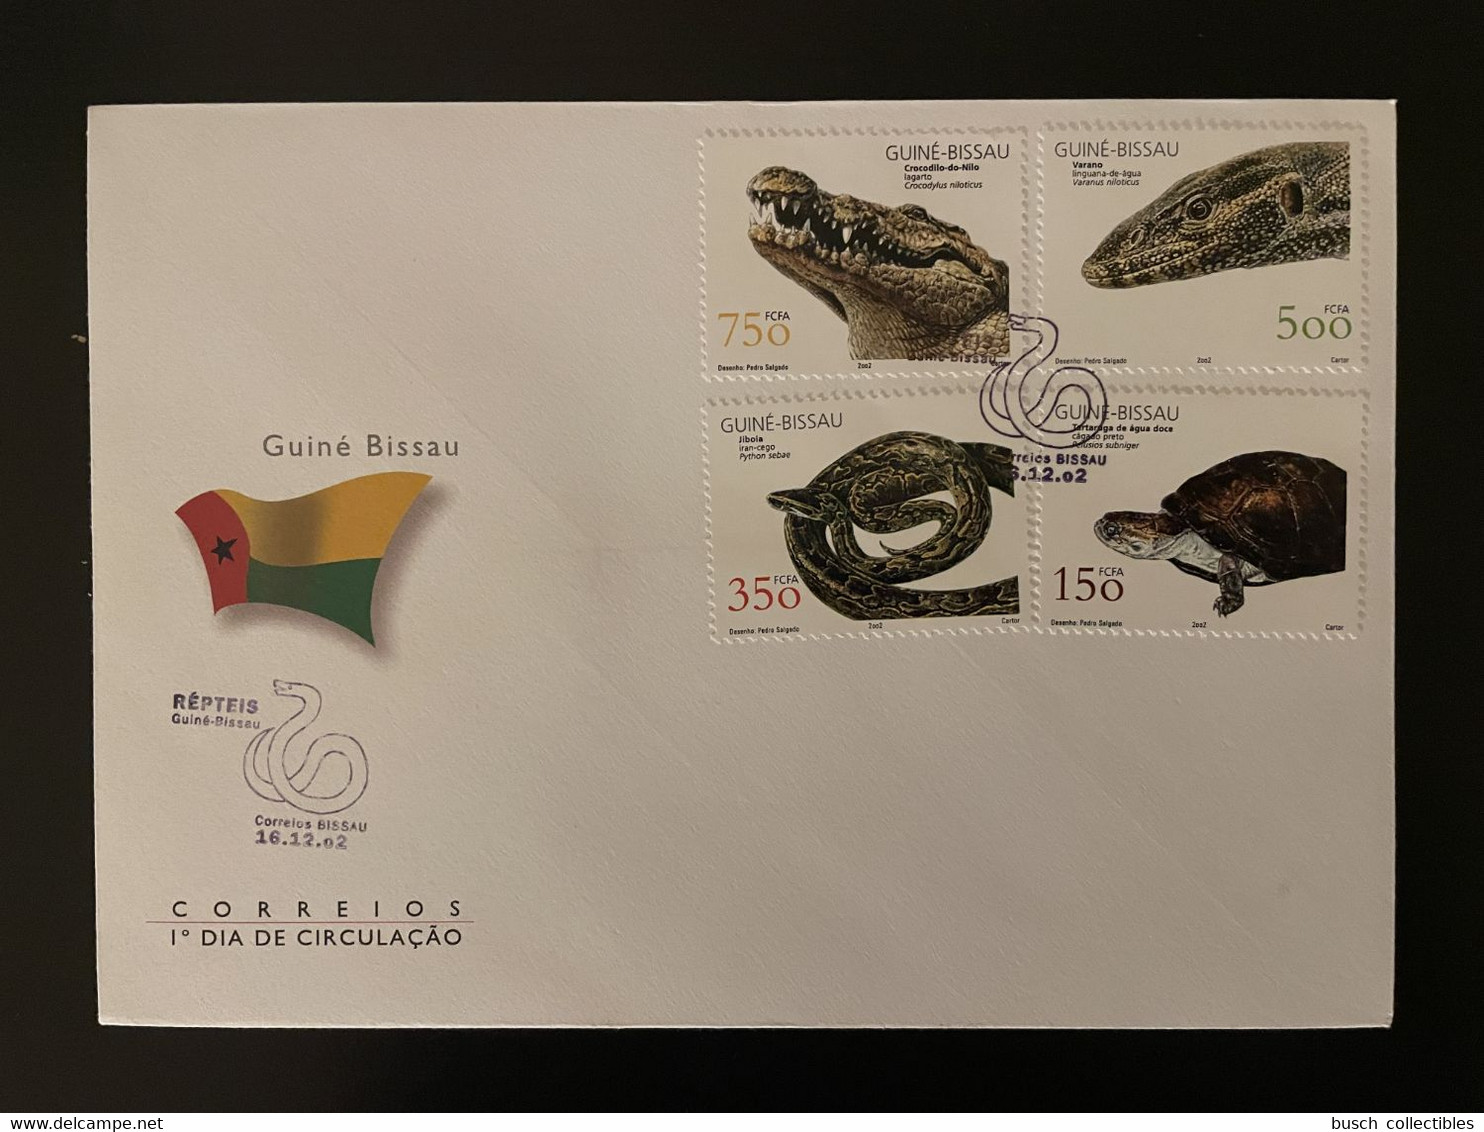 Guiné-Bissau Guinea Guinée Bissau 2002 Mi. 2029 - 2032 FDC Reptiles Reptilien Schildkröte Schlange Snake Serpent Tortue - Slangen